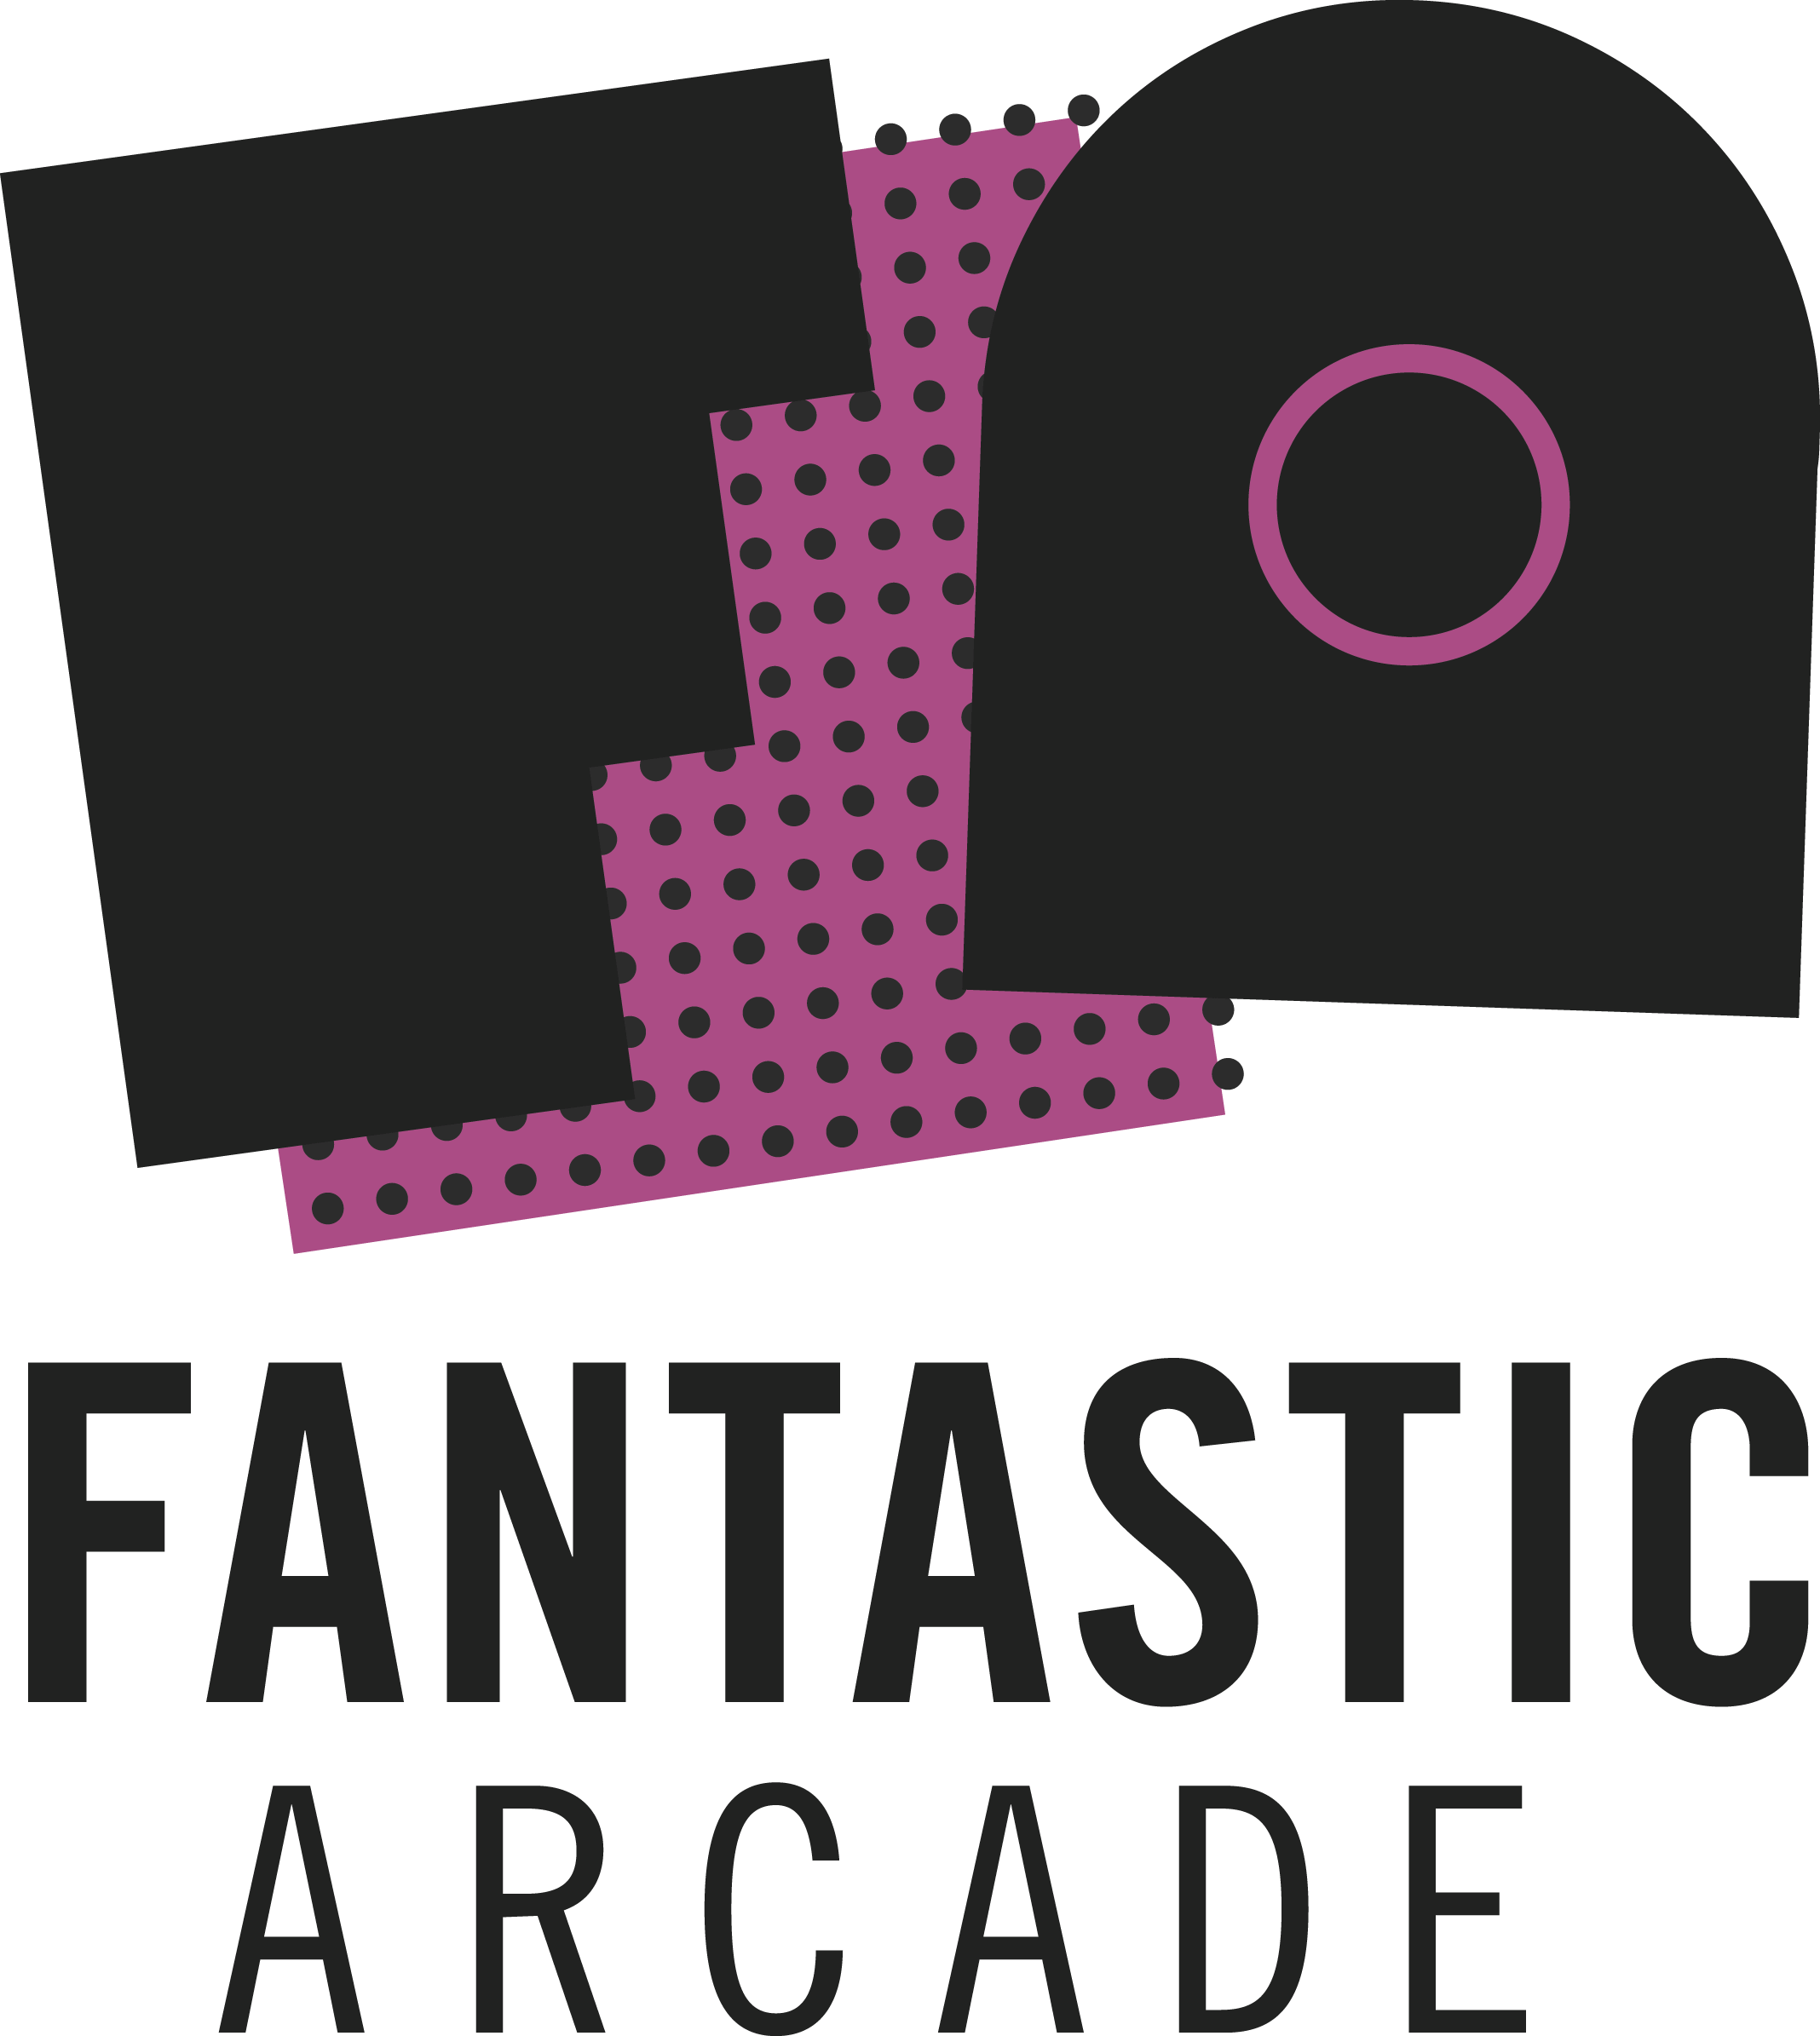 Fantastic Arcade Logo